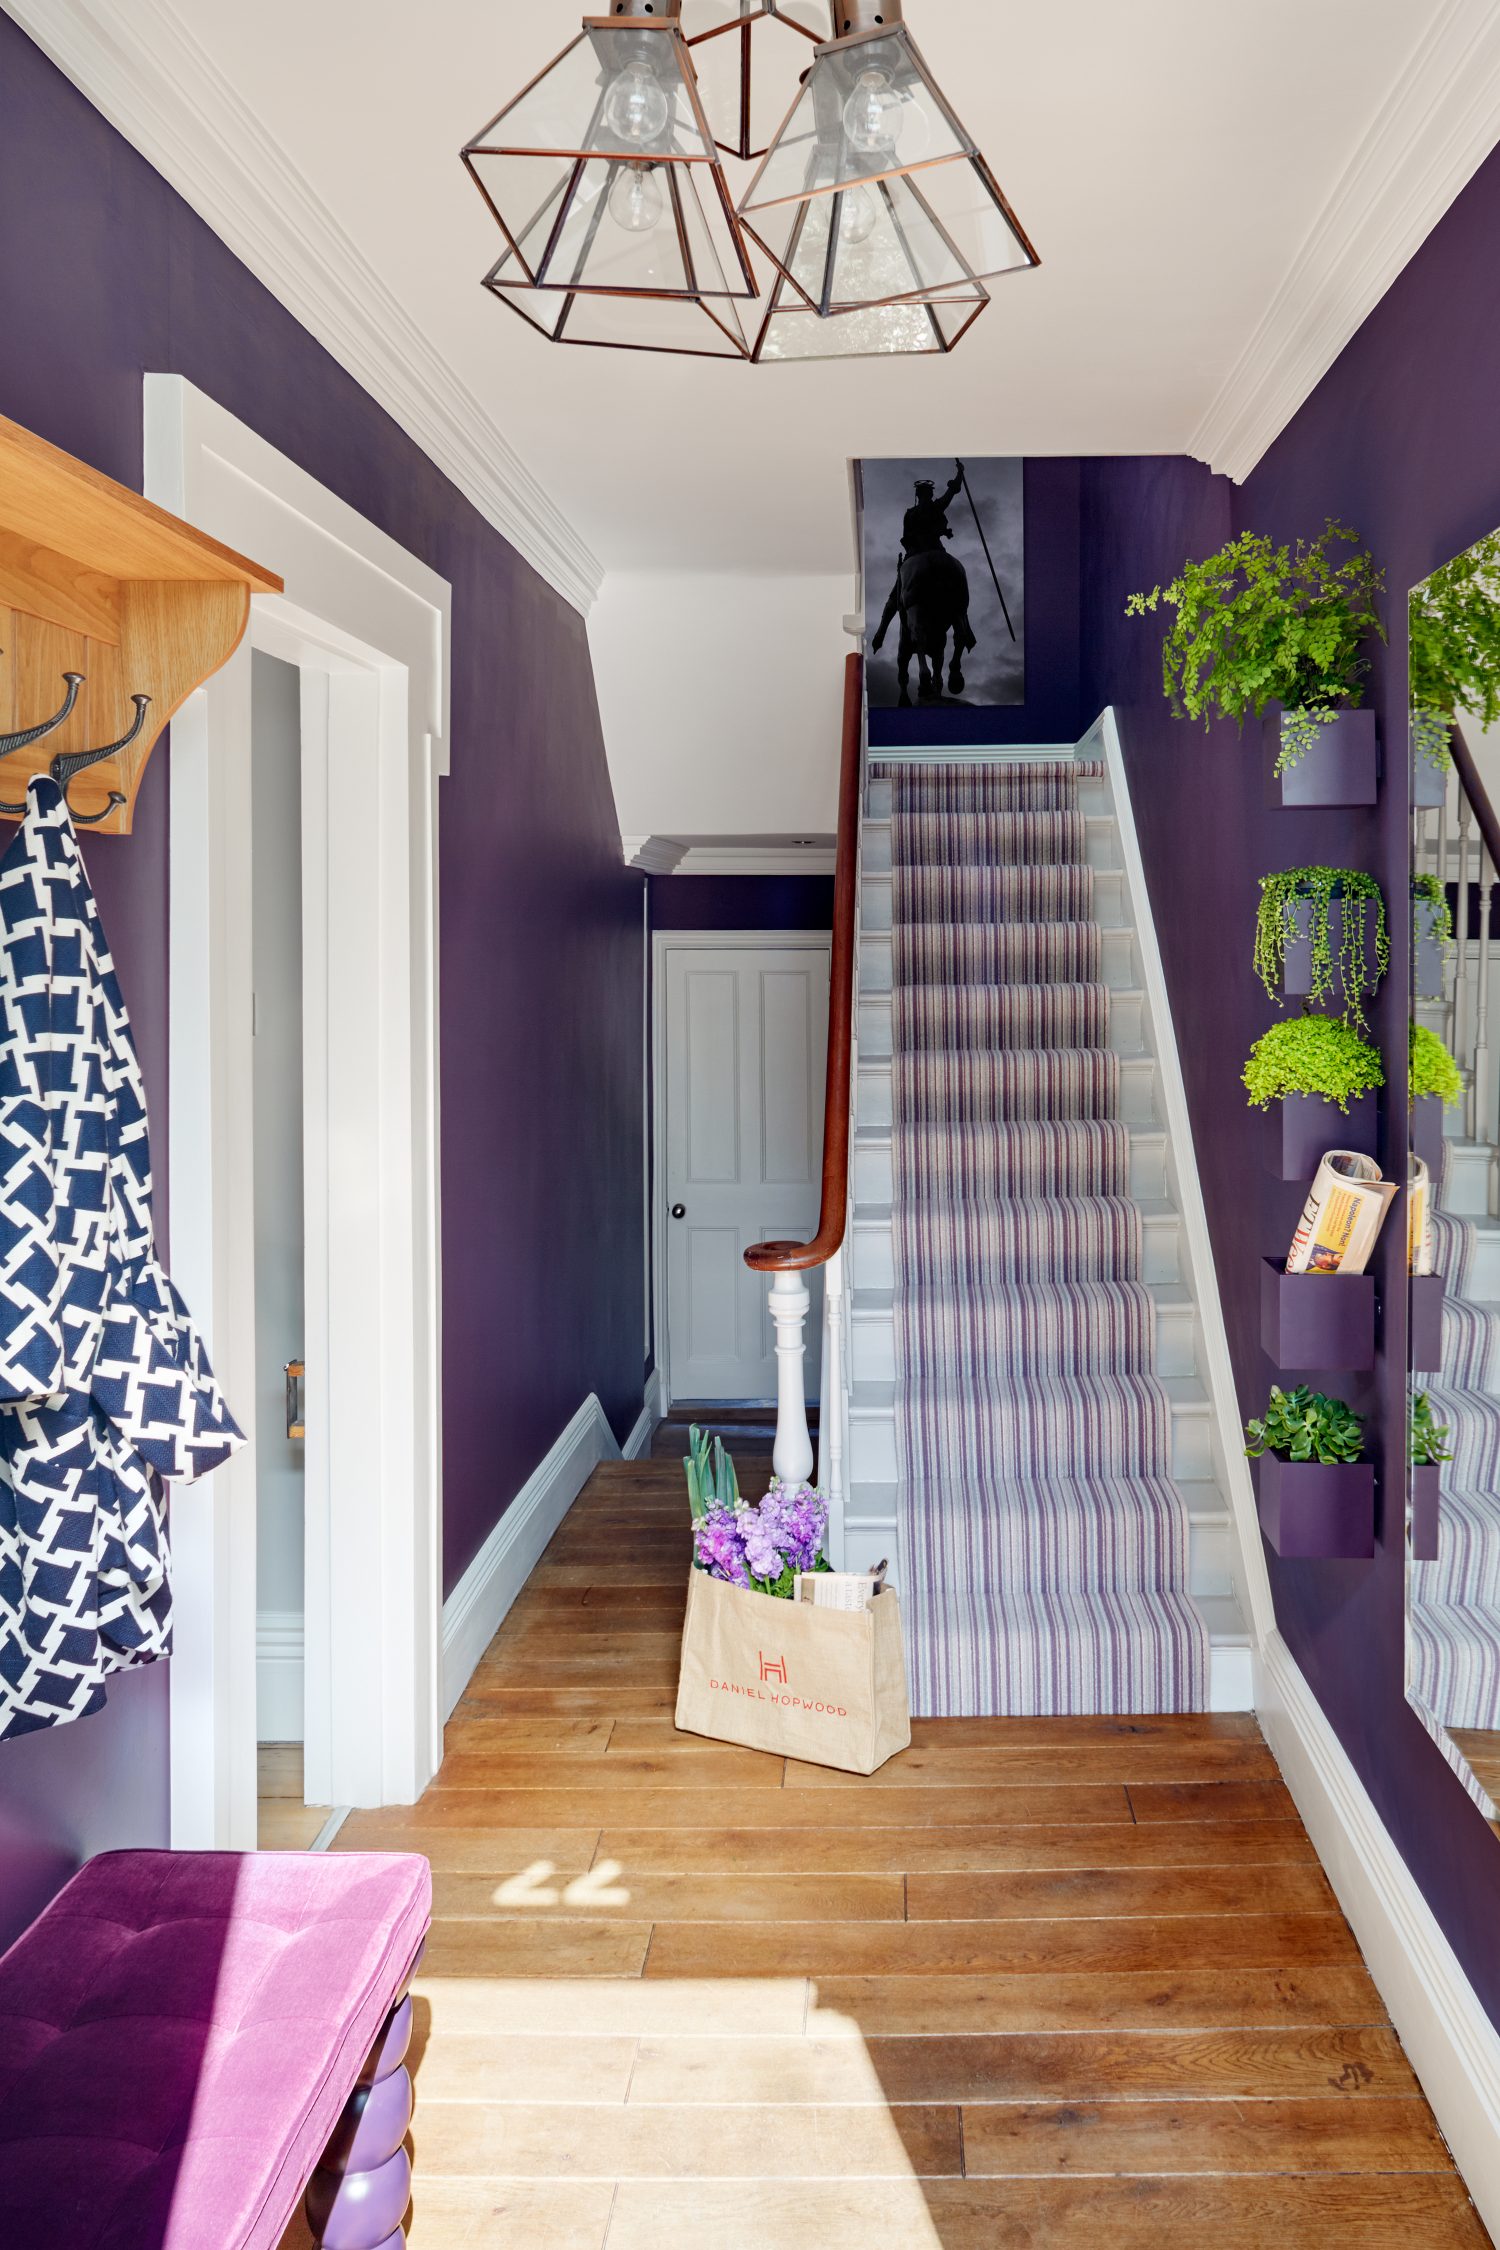 Happy House by Daniel Hopwood – deep purple hallway with high street lighting. Eclectic design